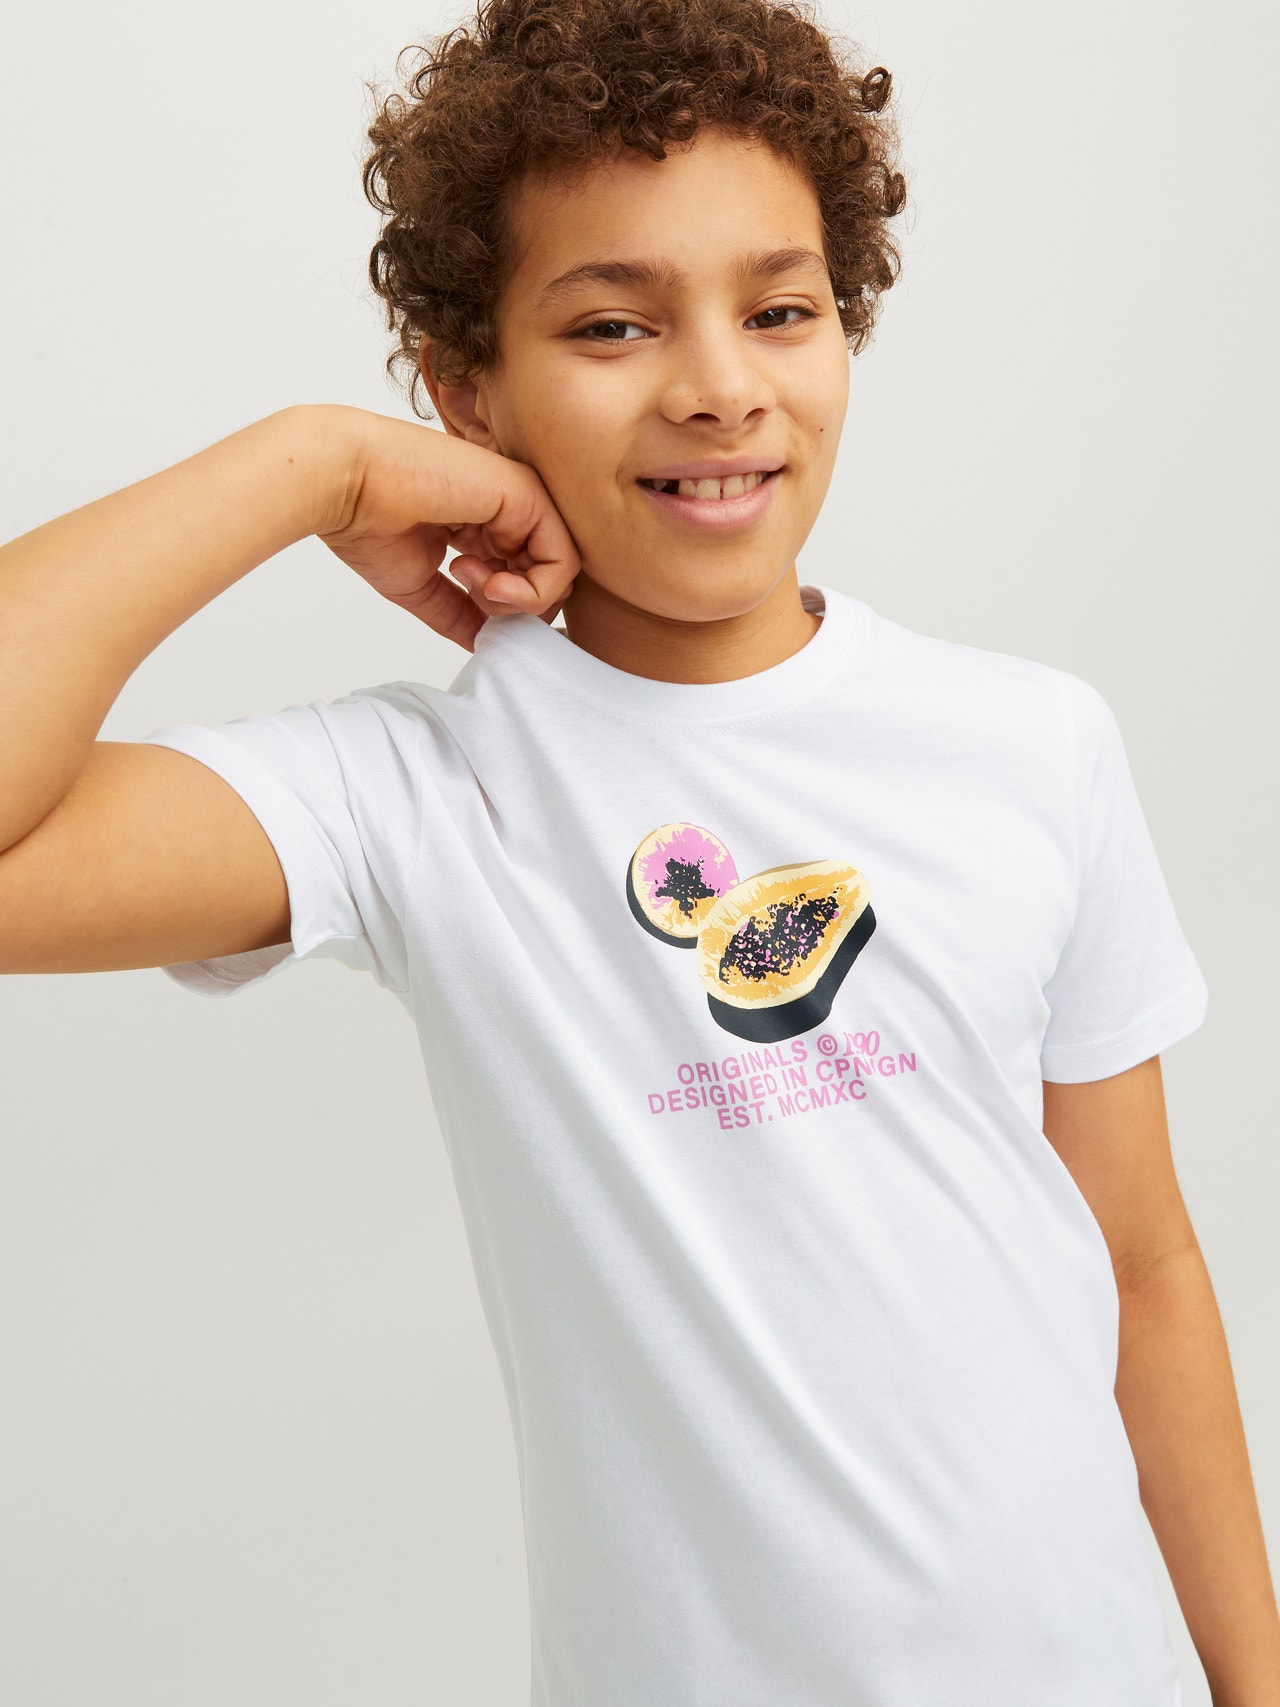 Jack & Jones Printed T-shirt For boys -Bright White - 12254031